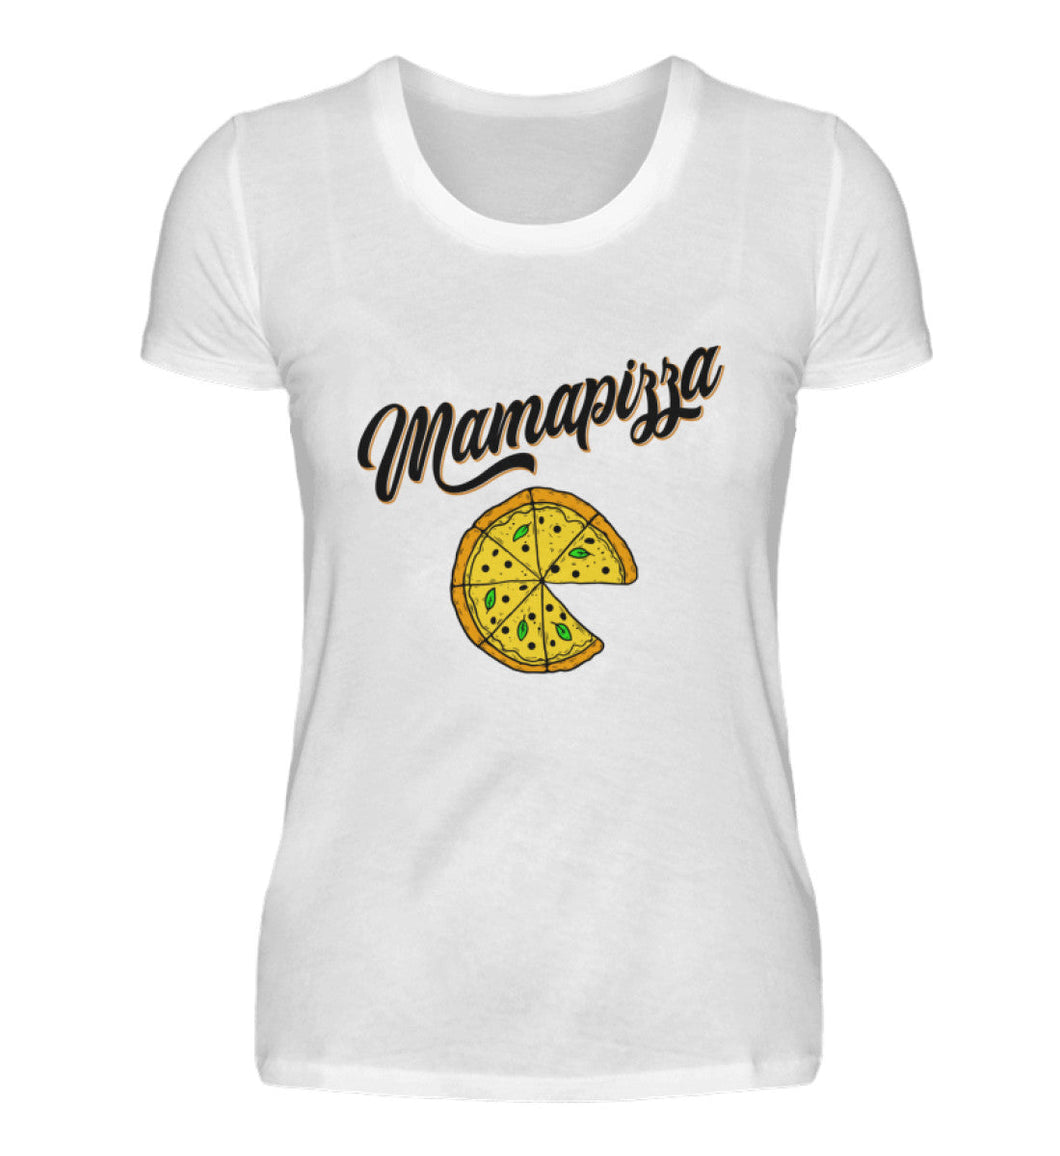 Mamapizza t-shirt  JEHS Kids weiß